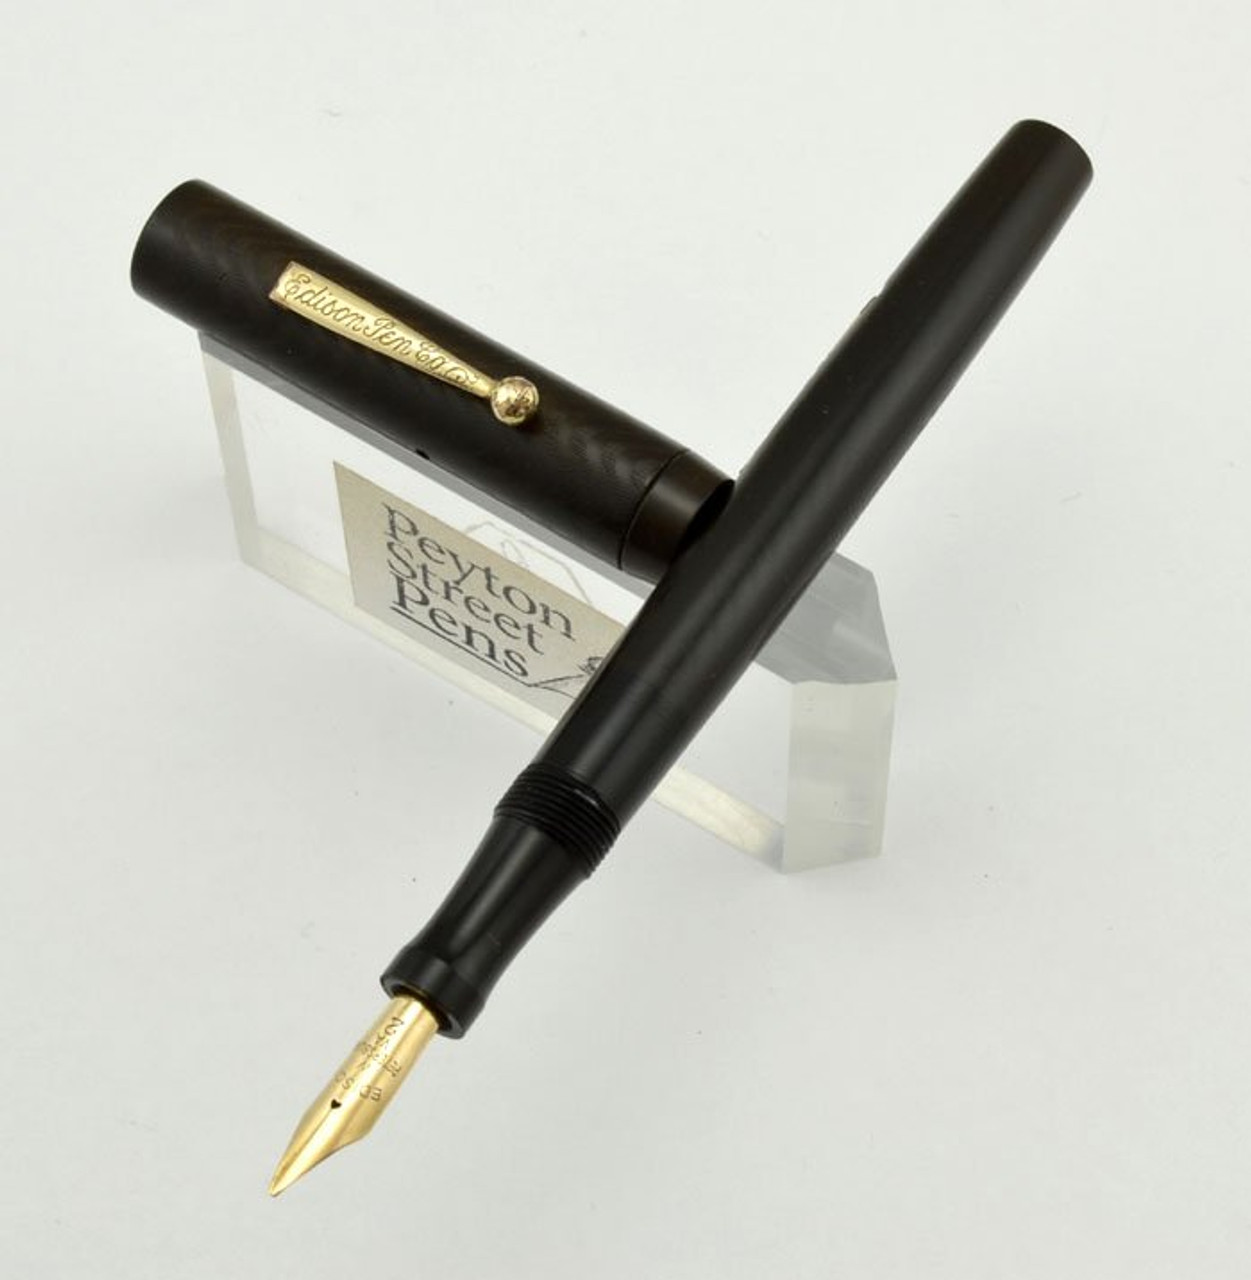 Edison Pen Co.Model 2 1/2 A  - BCHR Full Size, Lever Fill, Flexible Nib (Very Nice, Restored)